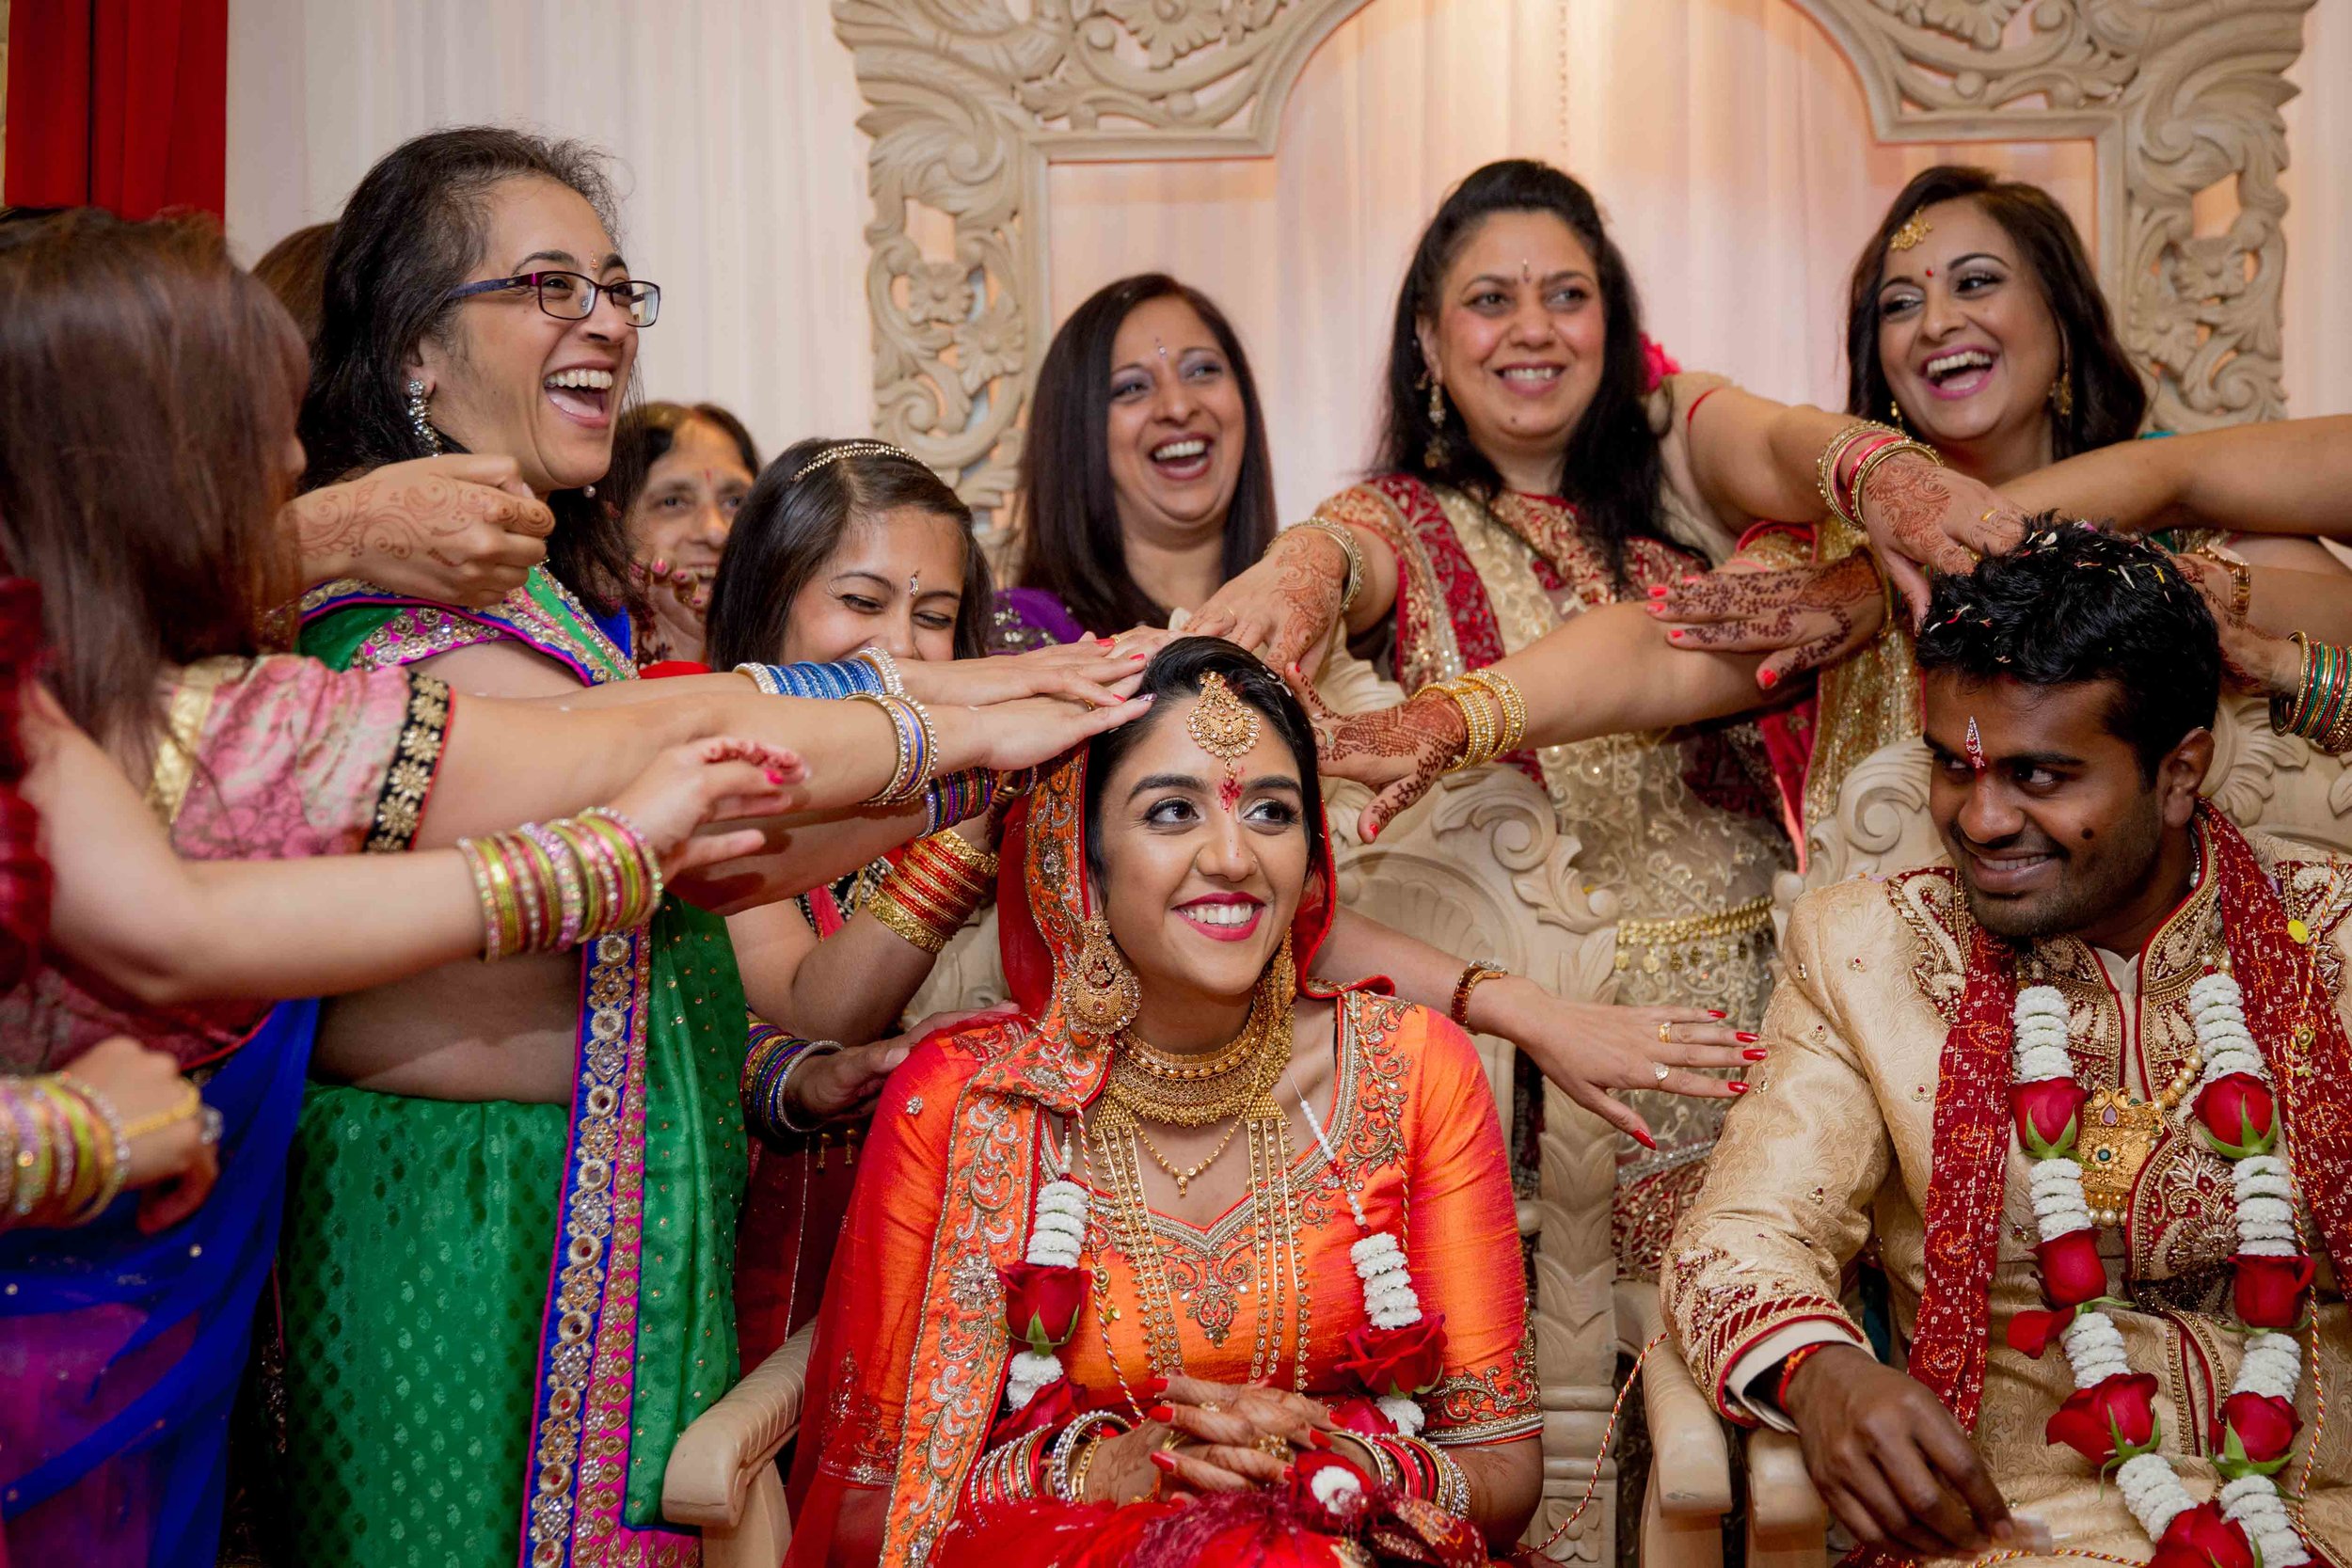 premier-banquetting-london-Hindu-asian-wedding-photographer-natalia-smith-photography-32.jpg